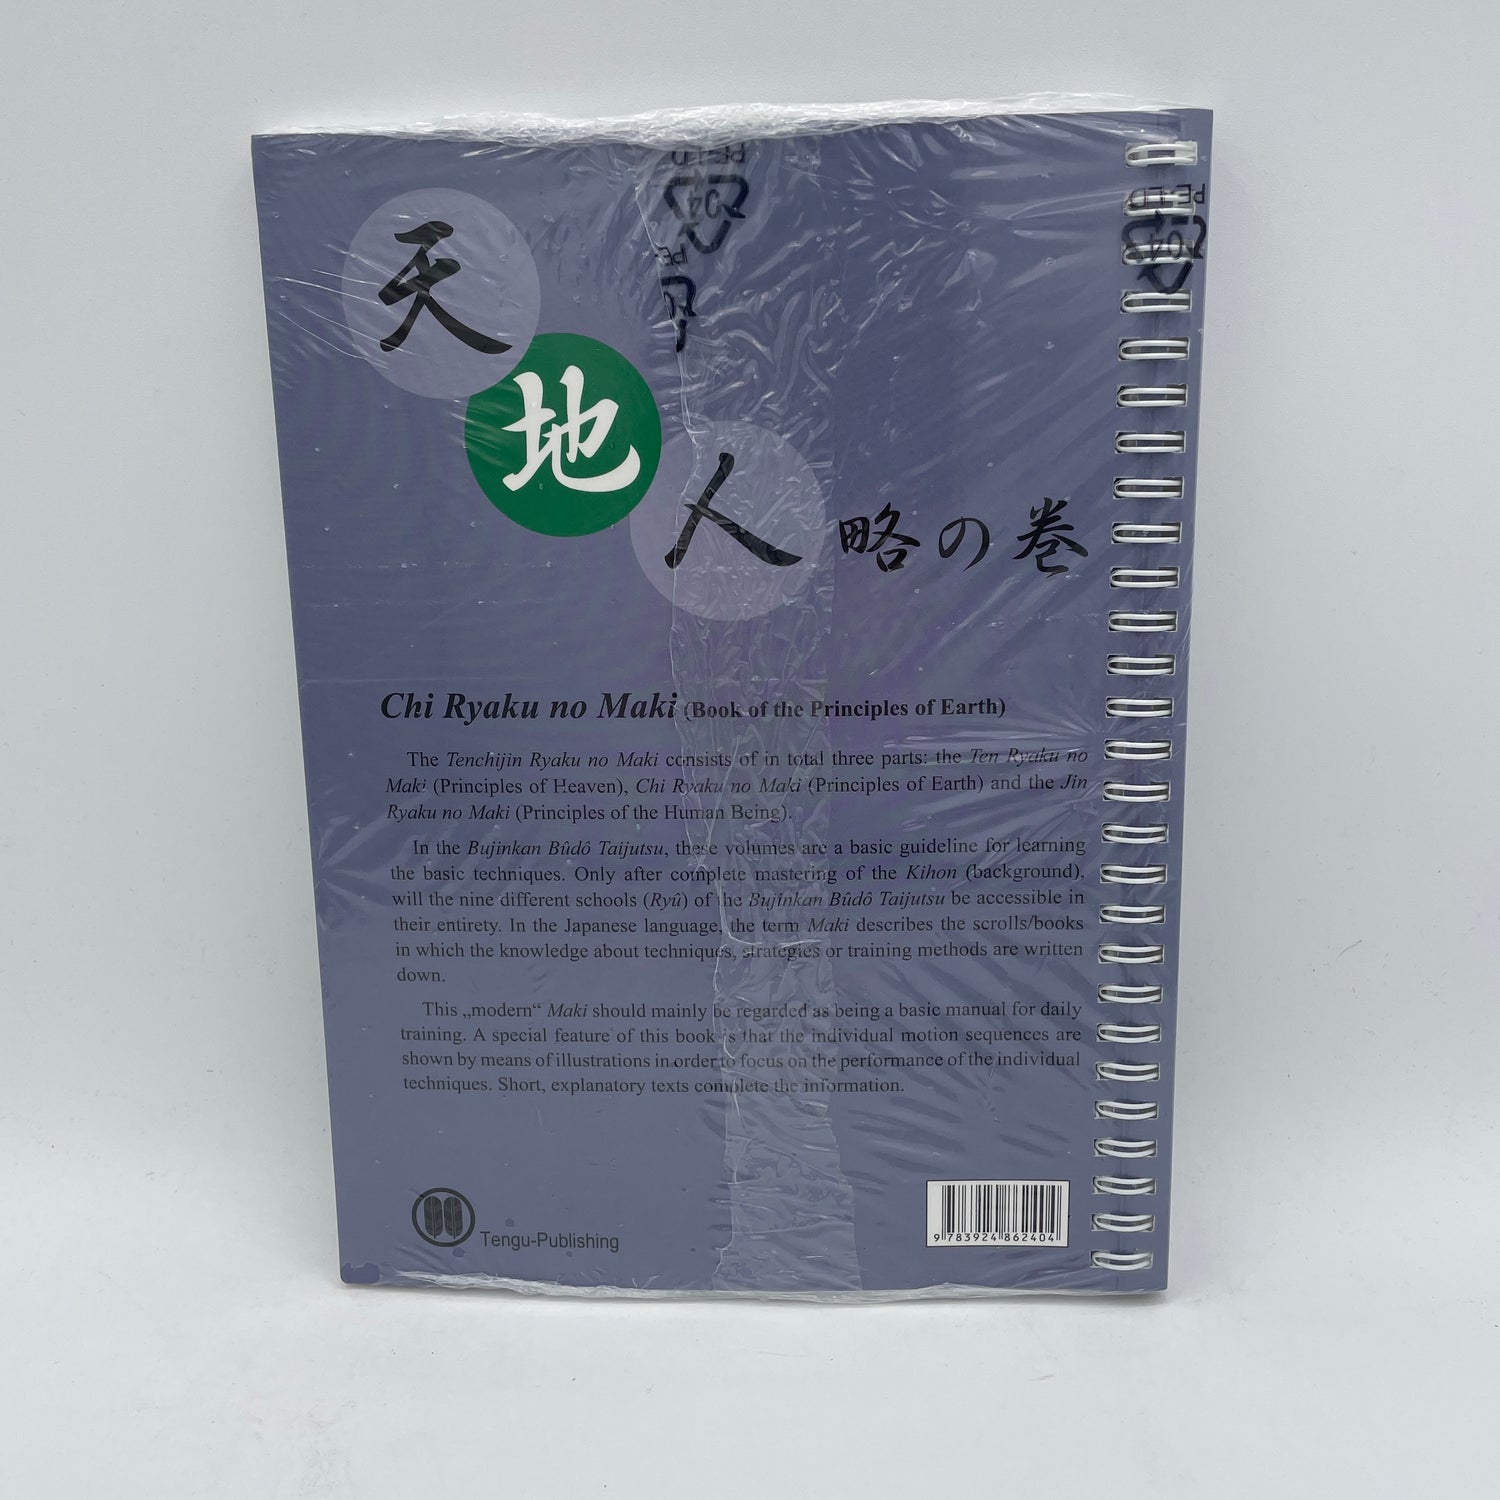 Chi Ryaku no Maki (Principles of Earth) Book by Carsten Kuhn